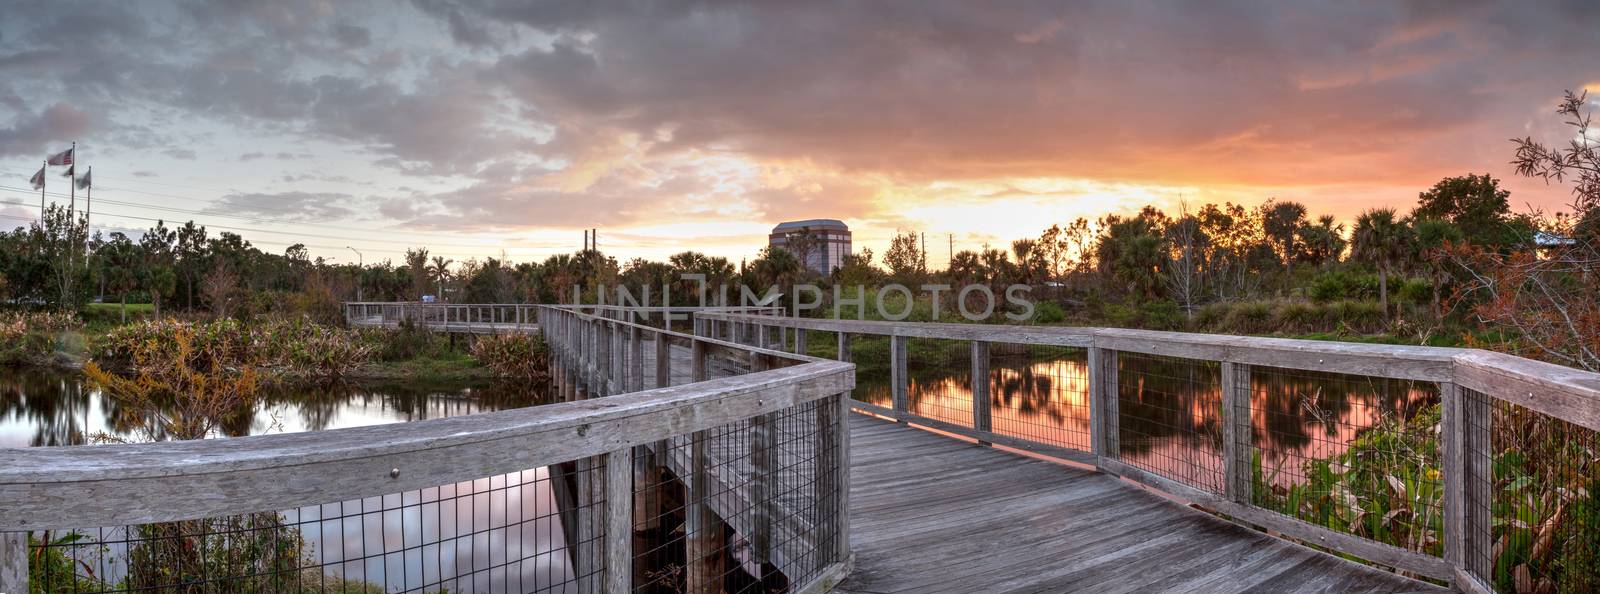 Bridge boardwalk made of wood along a marsh pond by steffstarr